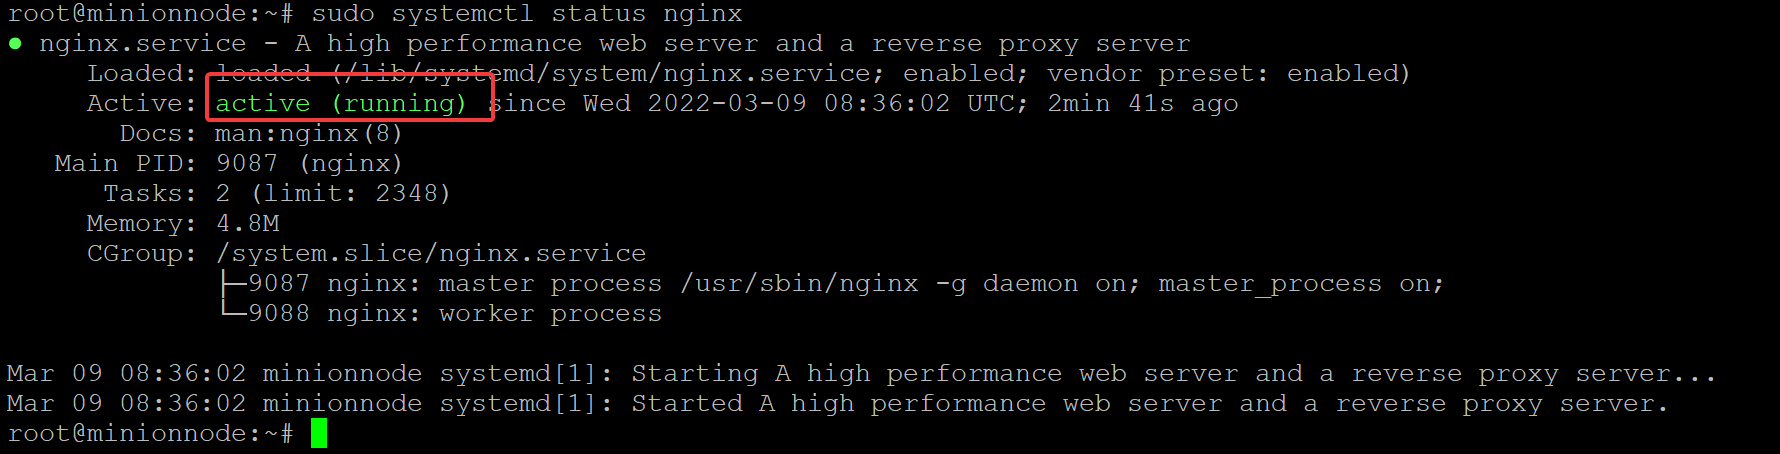 Checking the NGINX Web Server Status